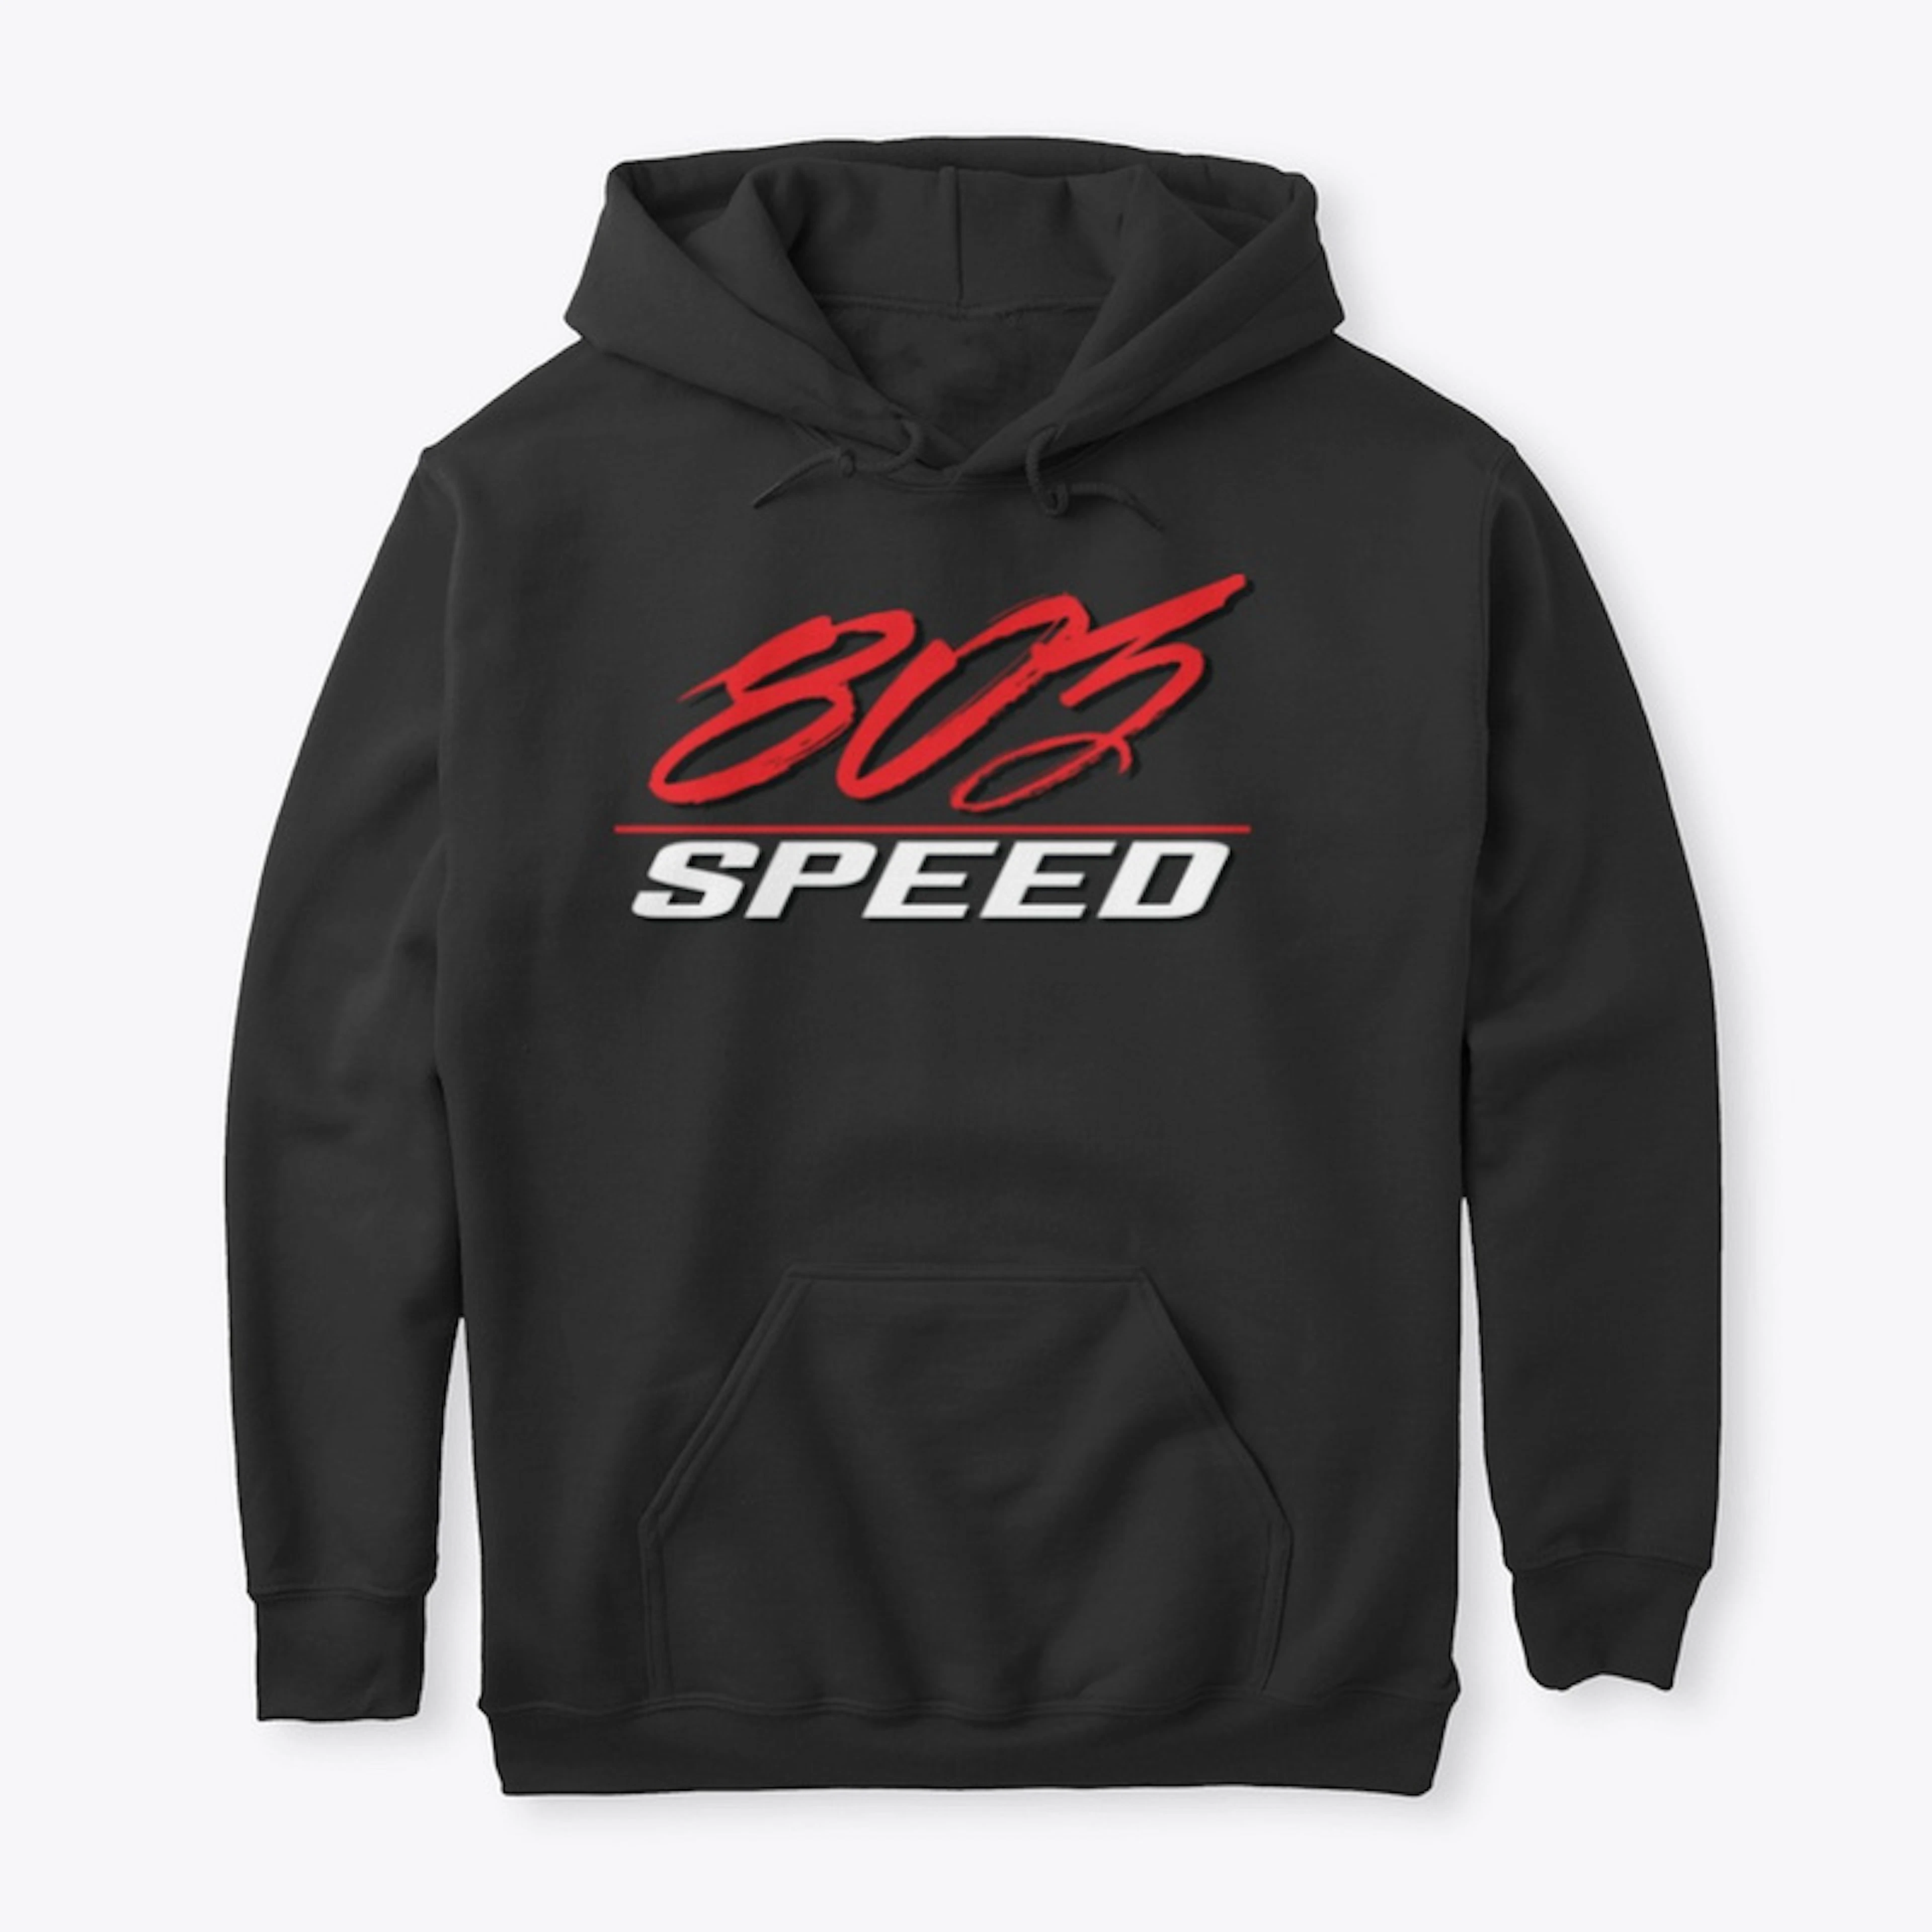 803 Speed Original